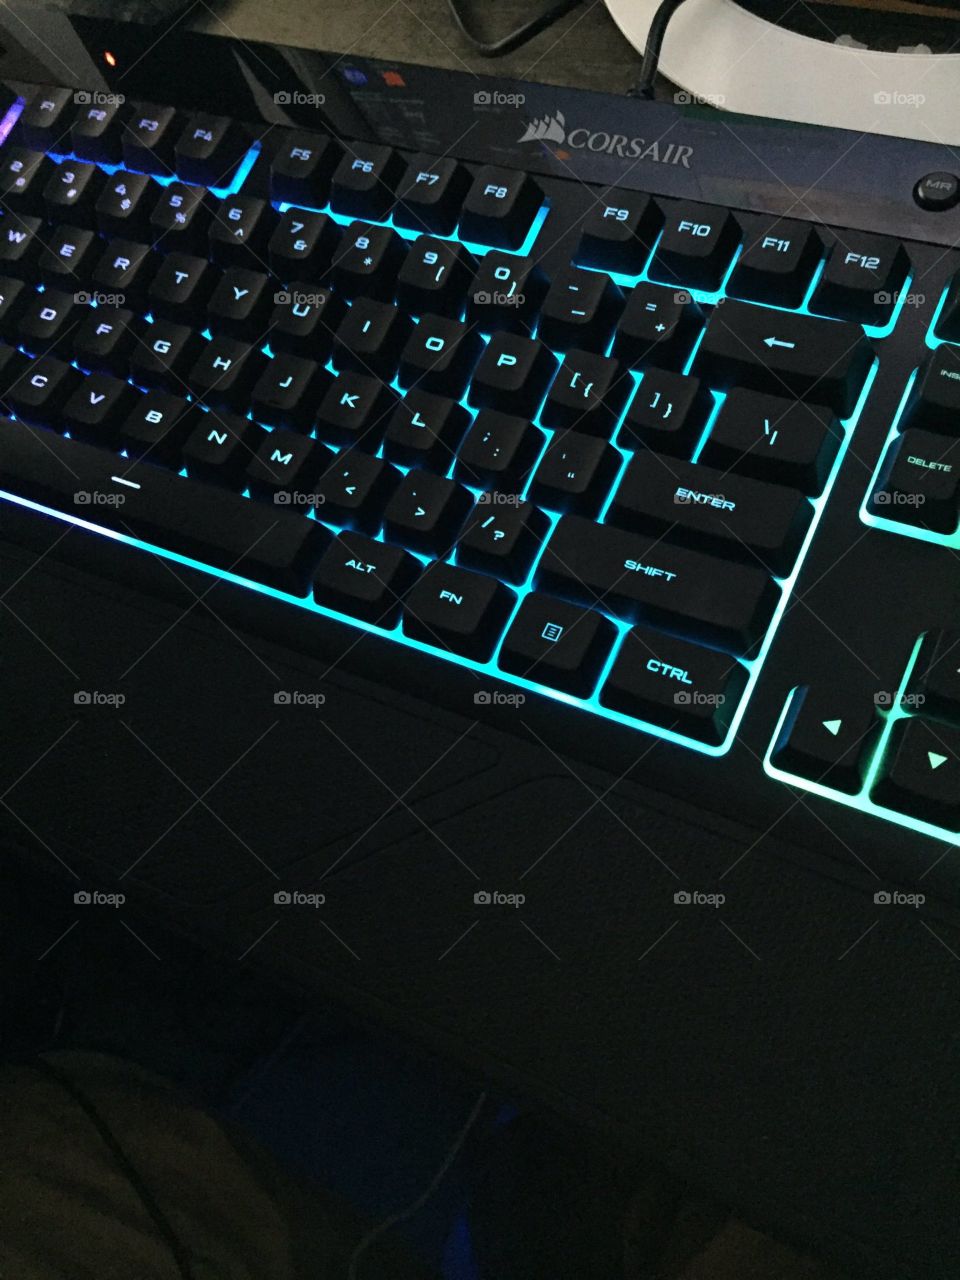 Corsair gaming keyboard